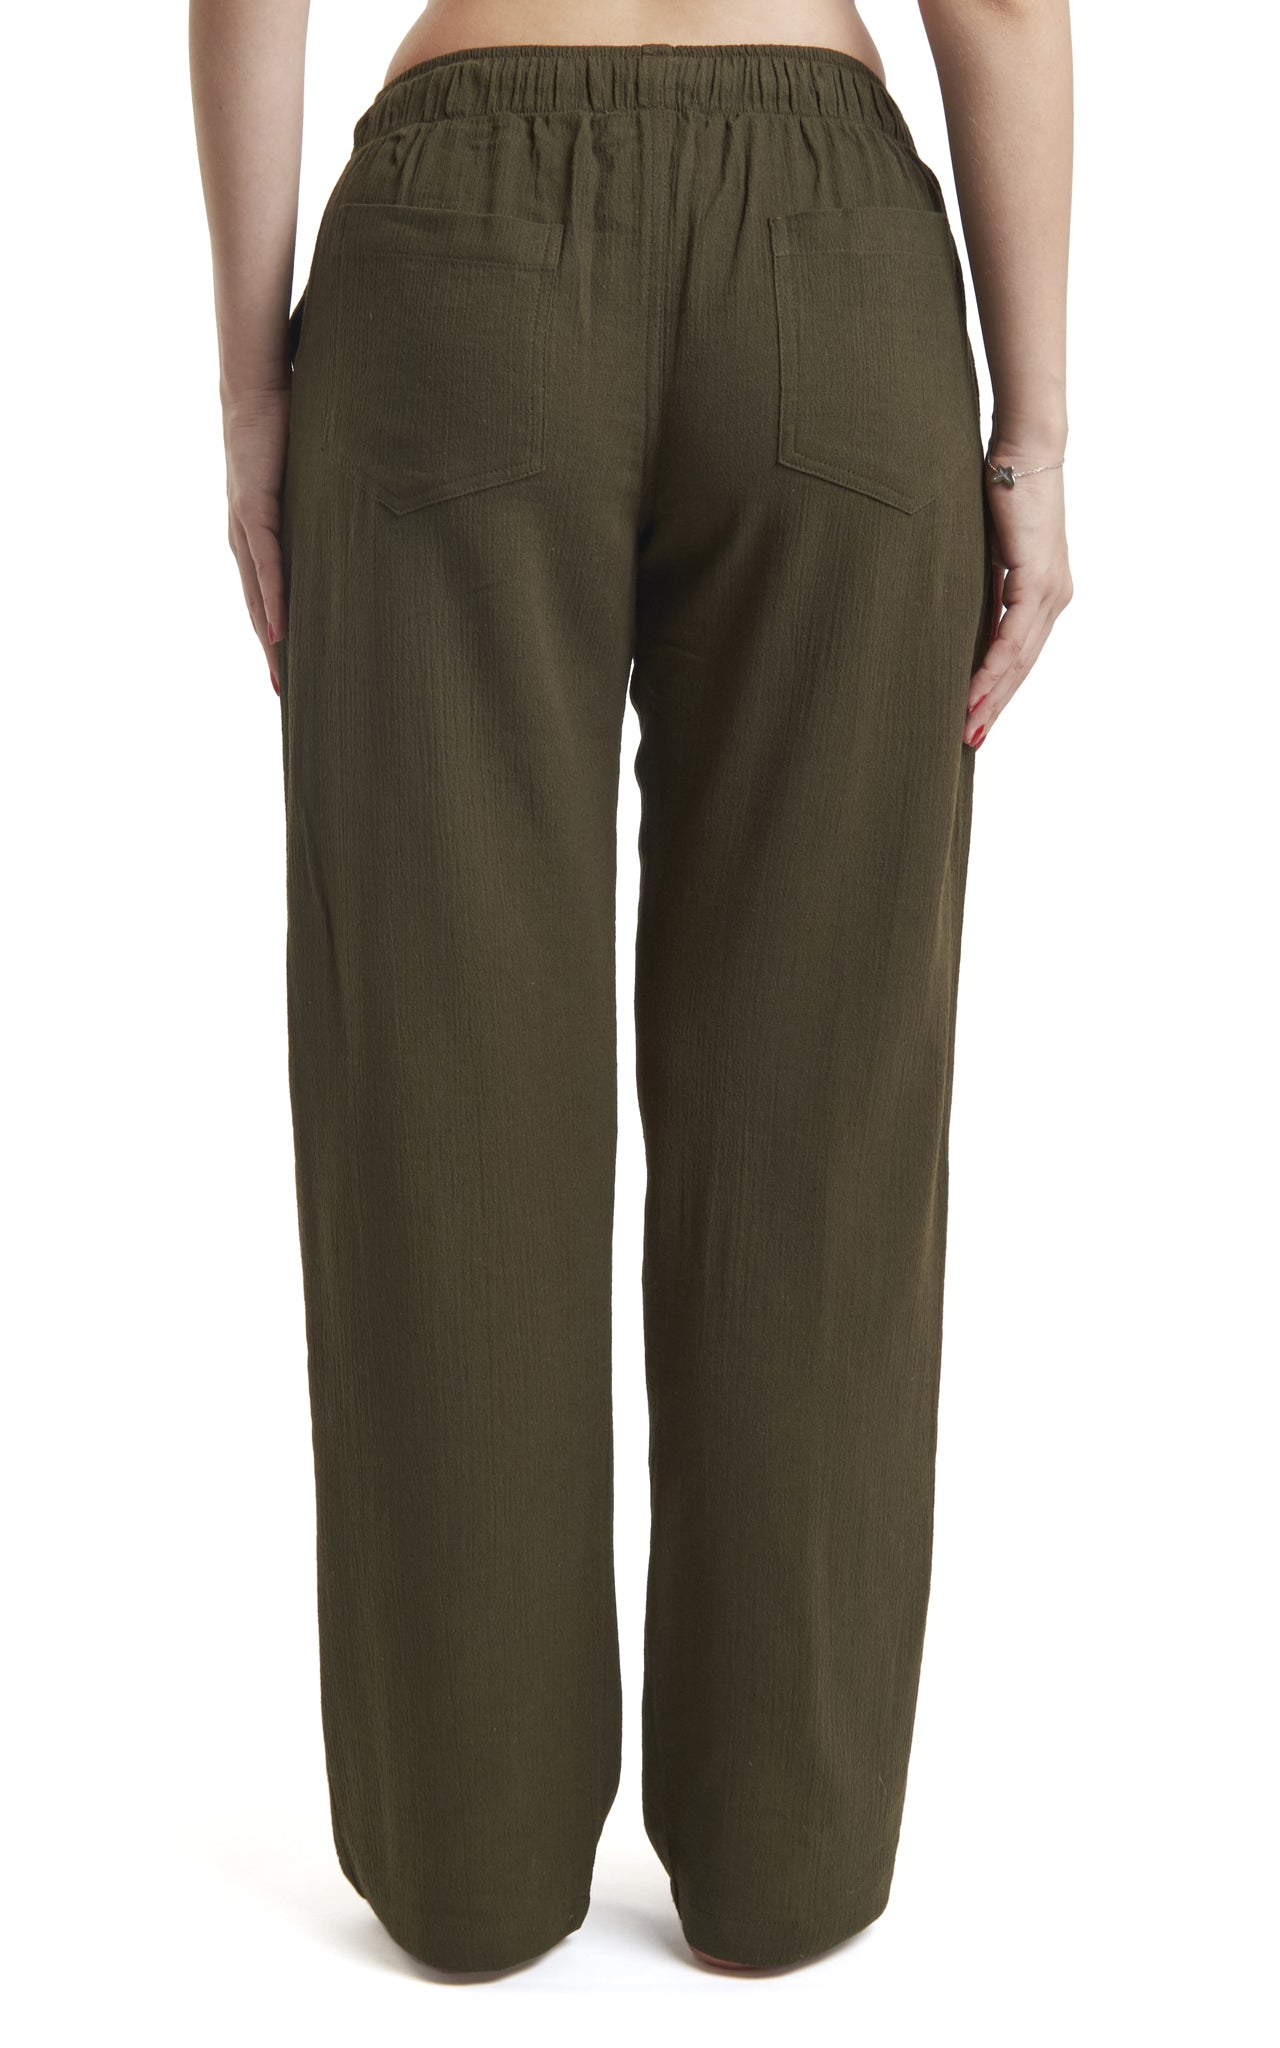 Women's Gauze Cotton PJ & Beach Pants with Pockets (Green)